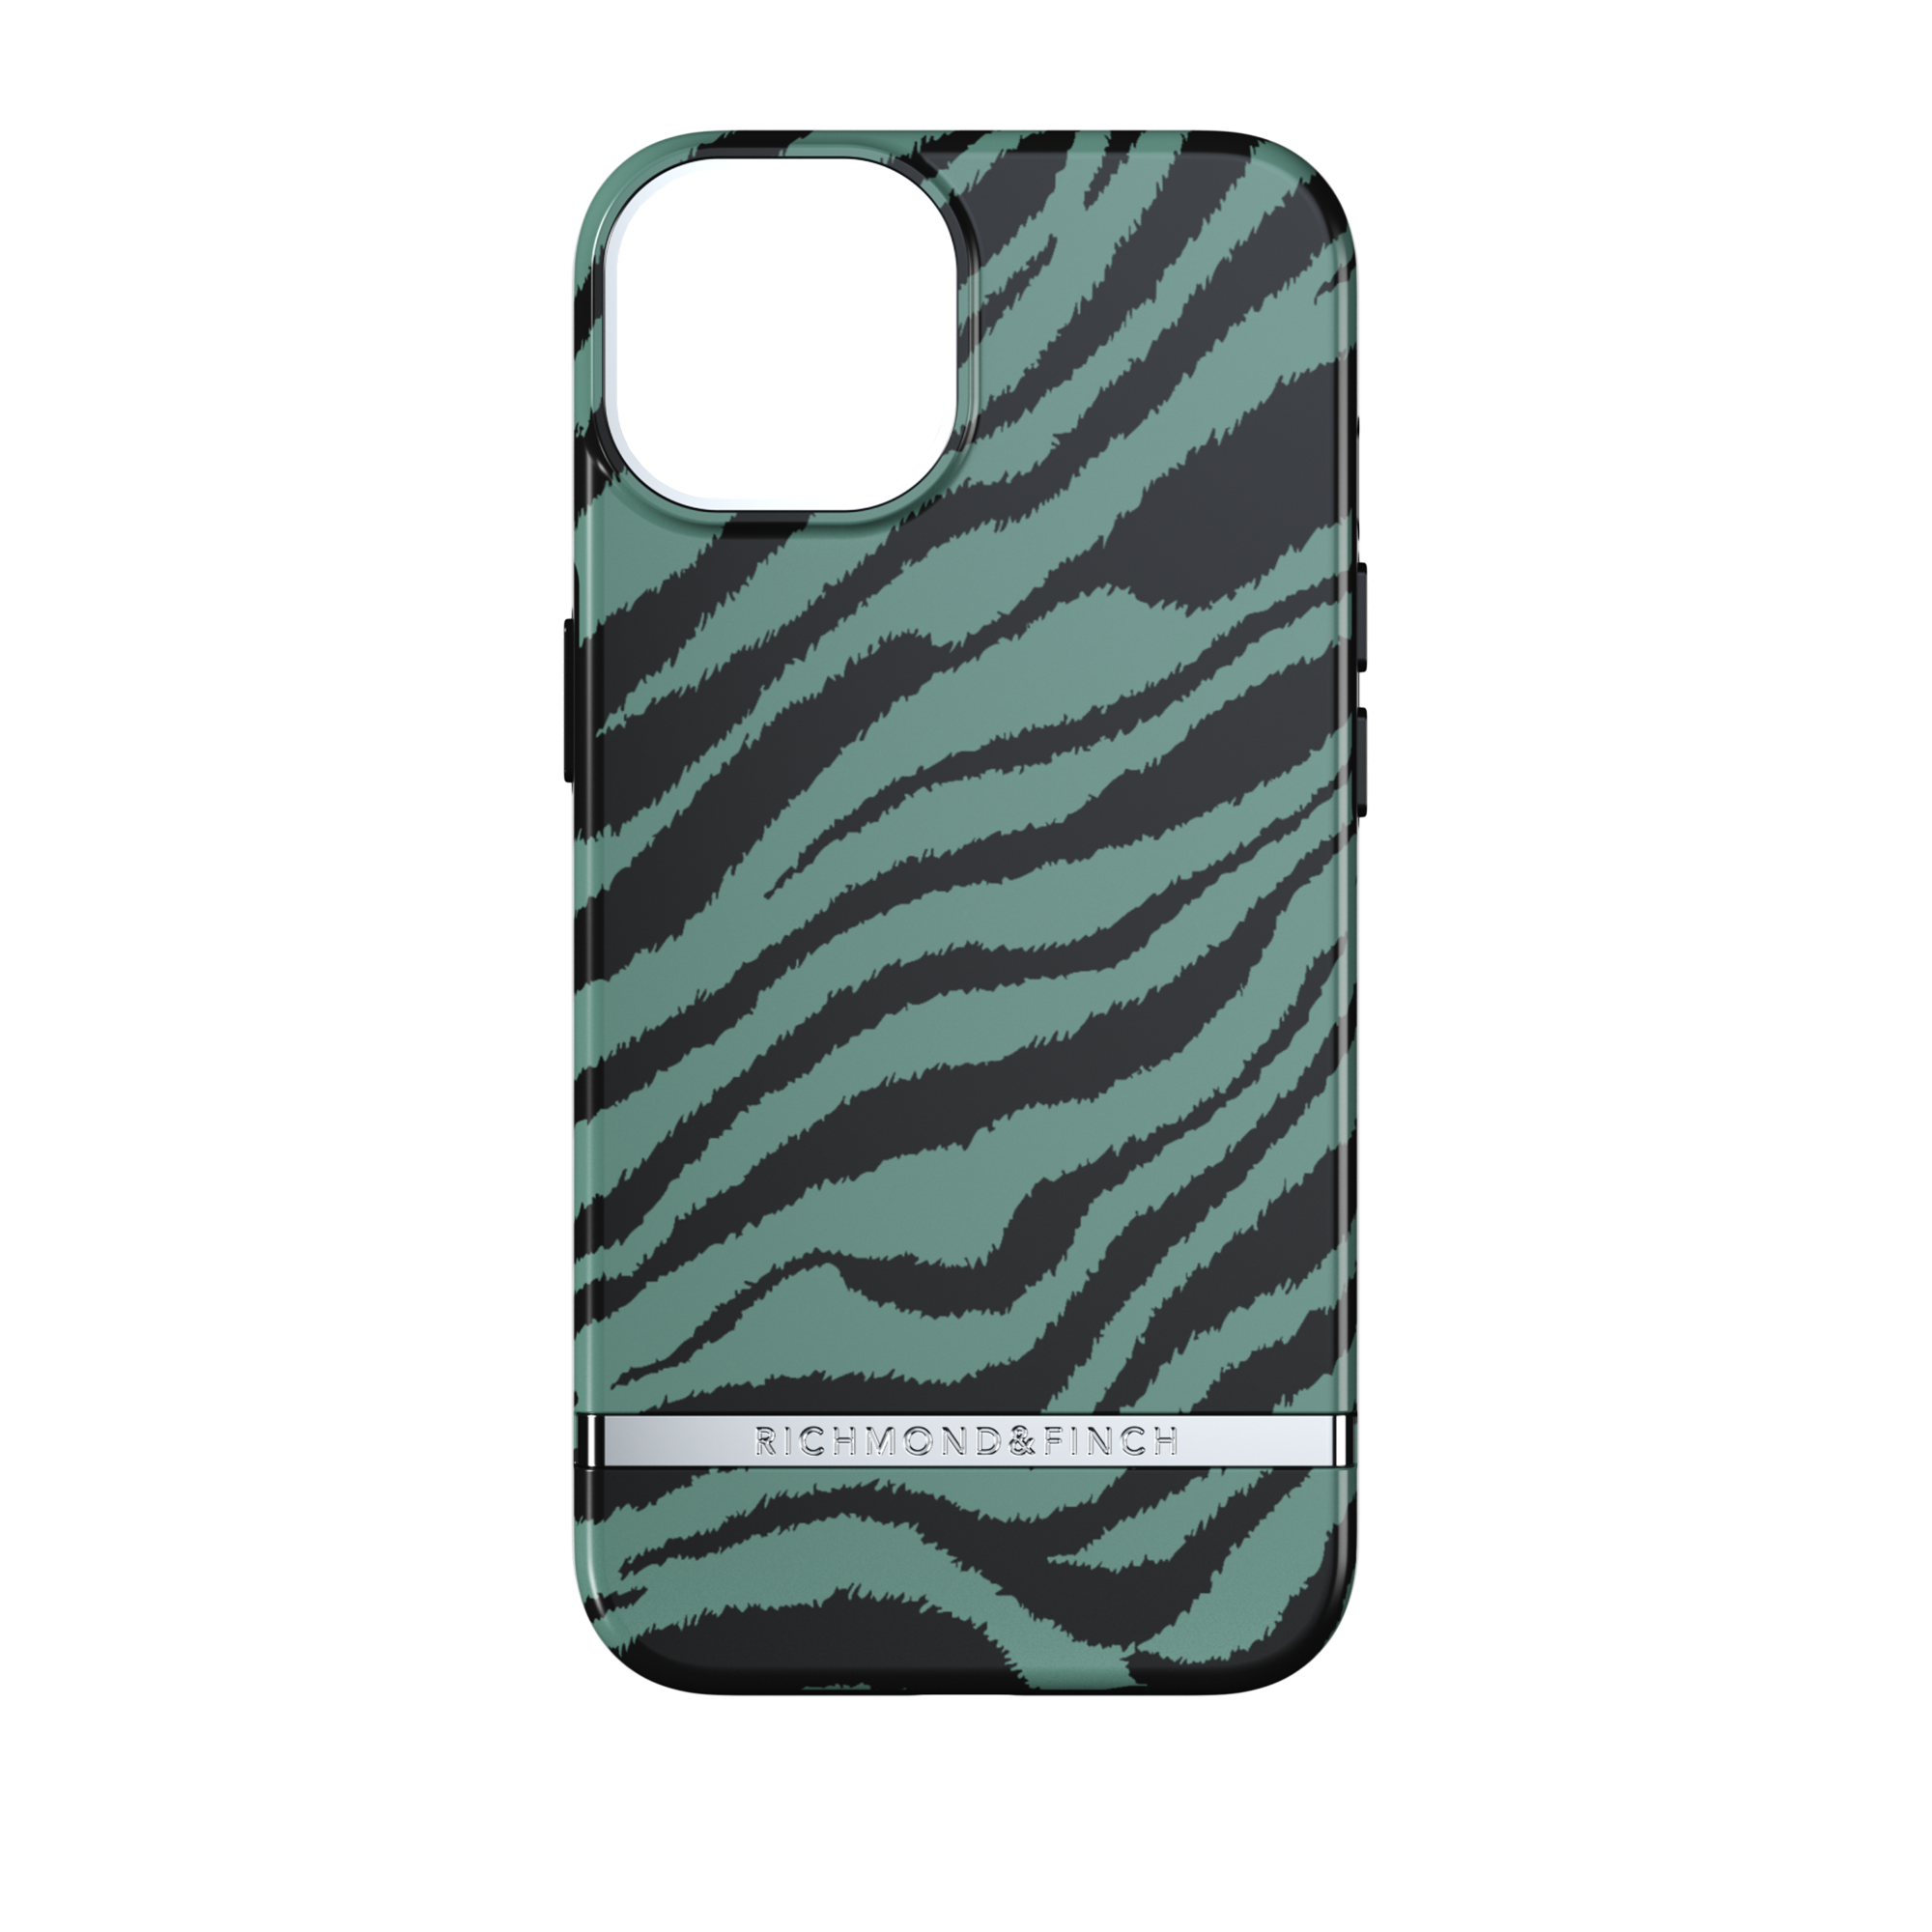 Backcover, Zebra Smaragd, FINCH 13, Apple, & RICHMOND grün iPhone iPhone Tasche